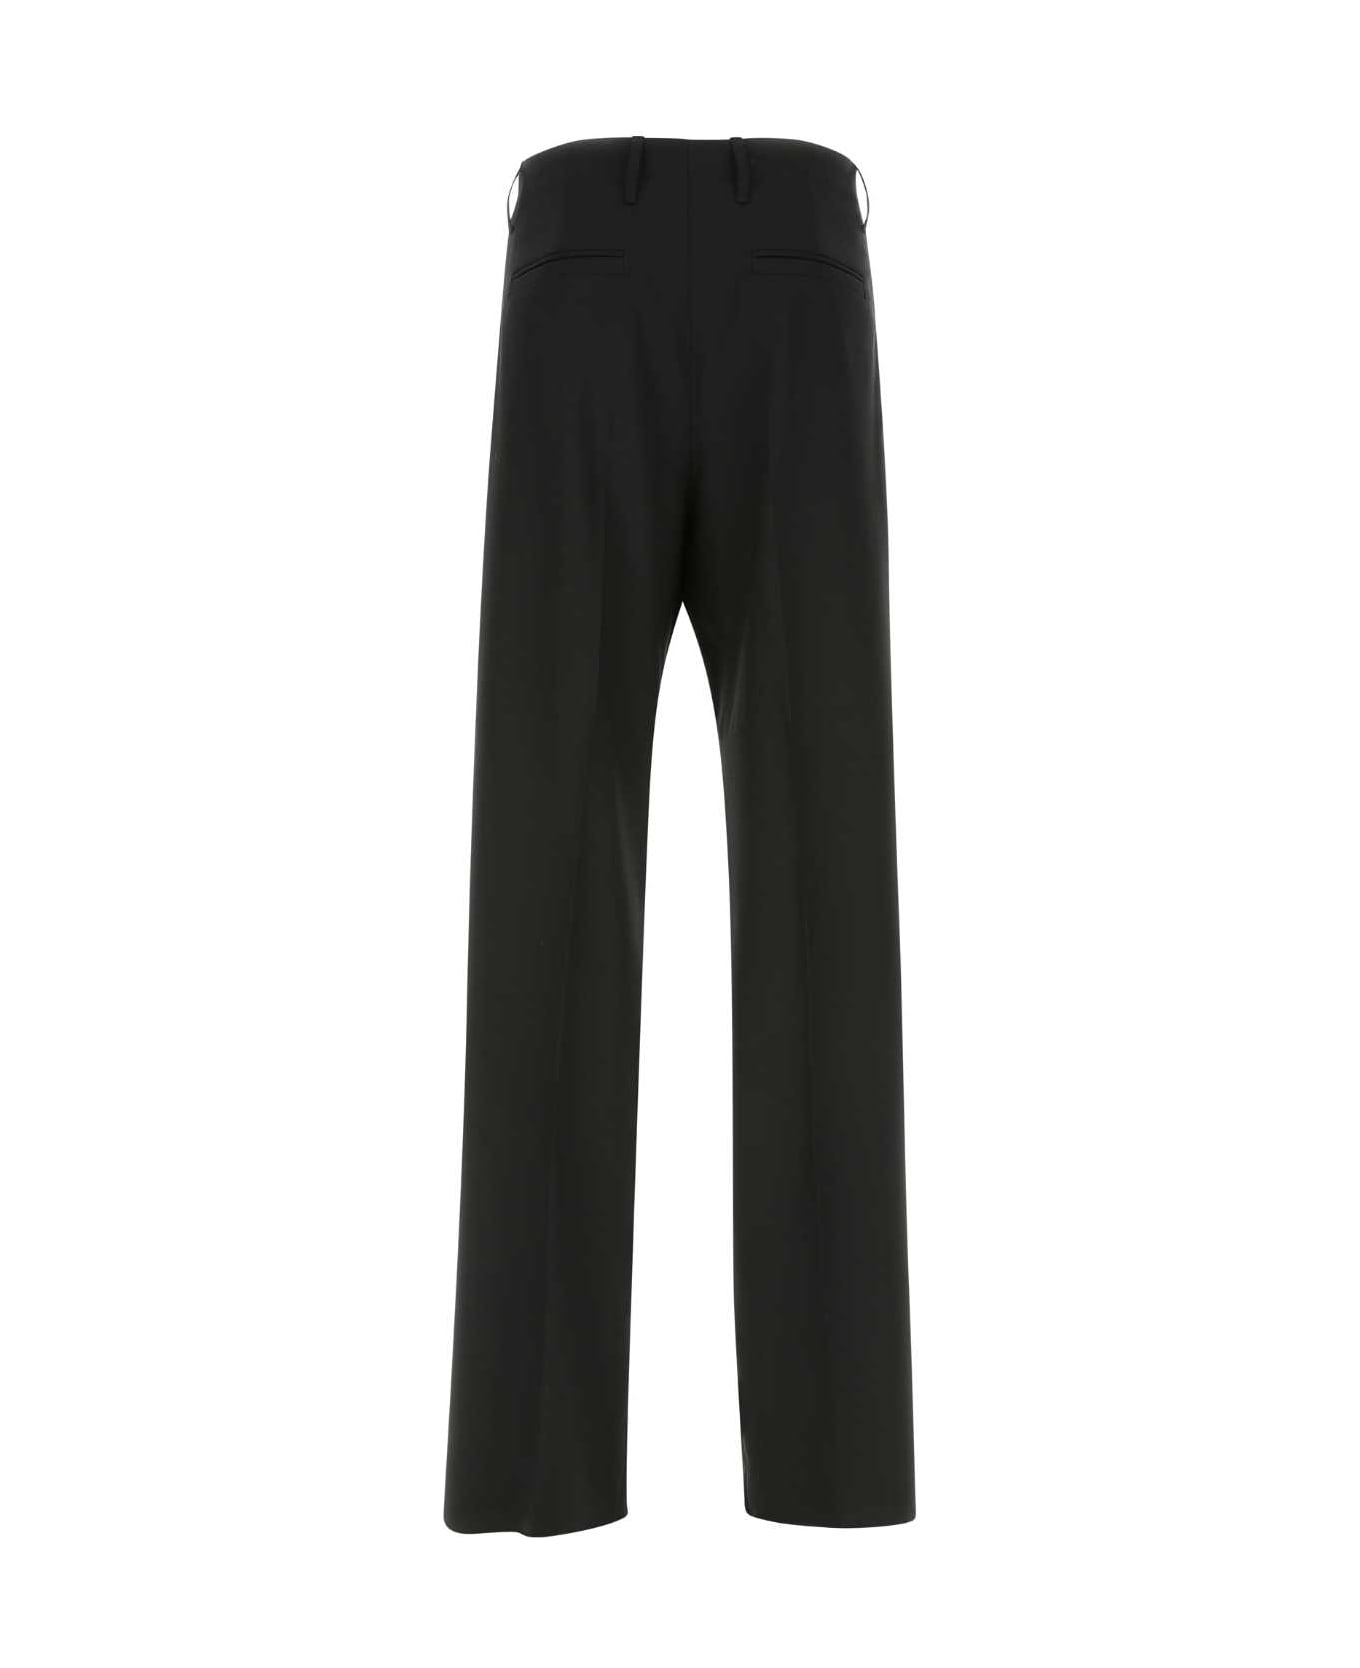 Versace Black Stretch Wool Pant - 1B000 ボトムス